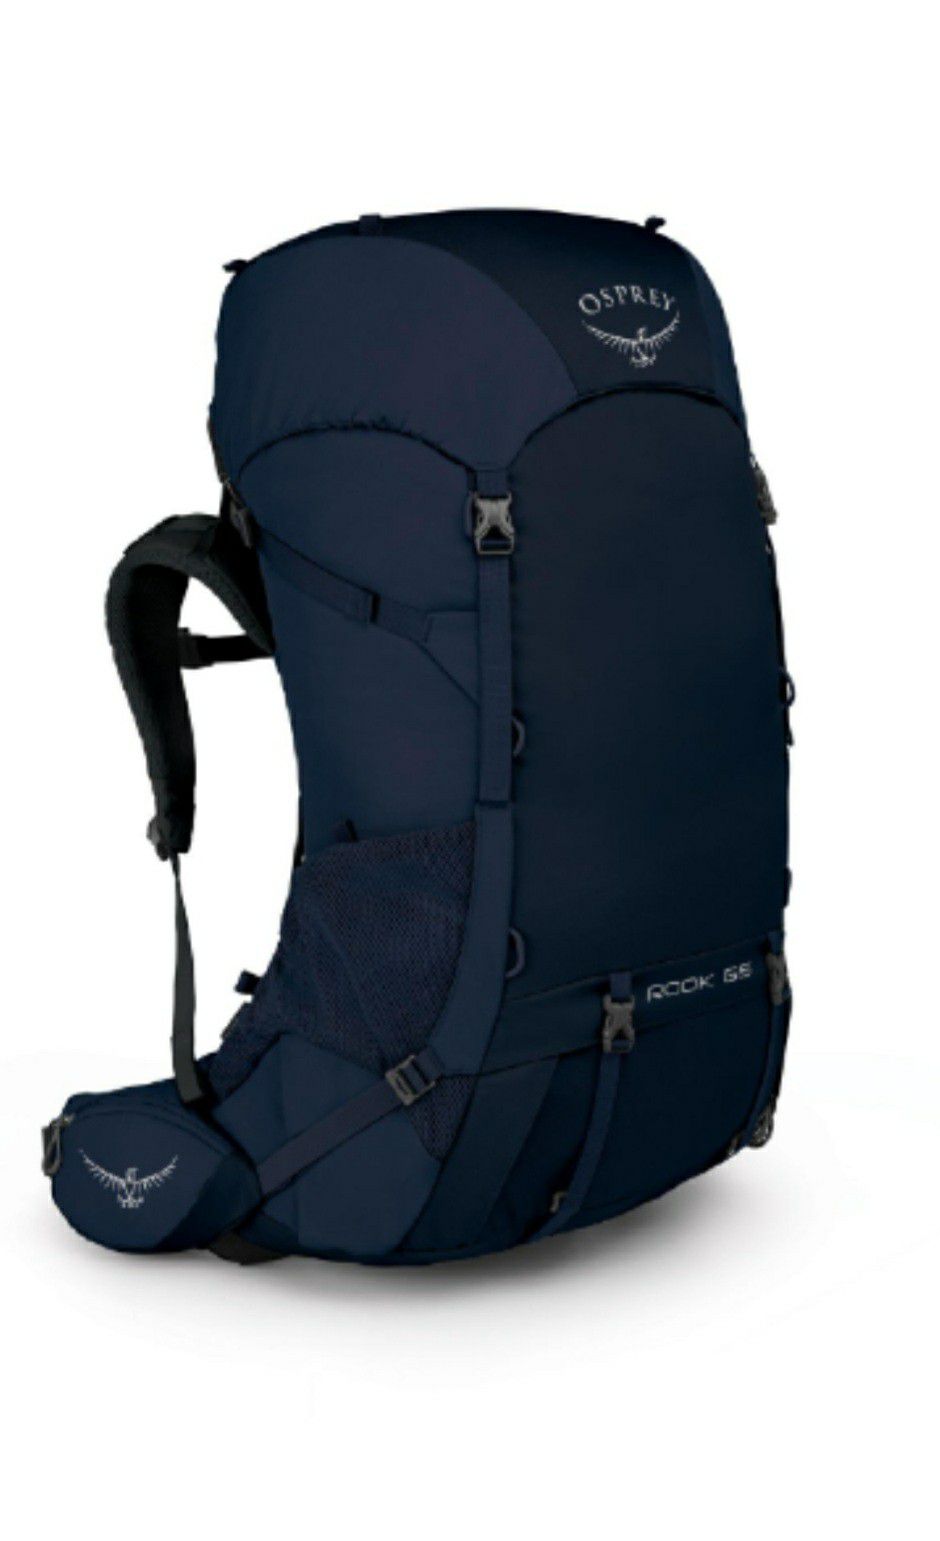 Osprey Rook 65 Trekking Backpack Thru-Hiking Midnight Blue One Size NWT